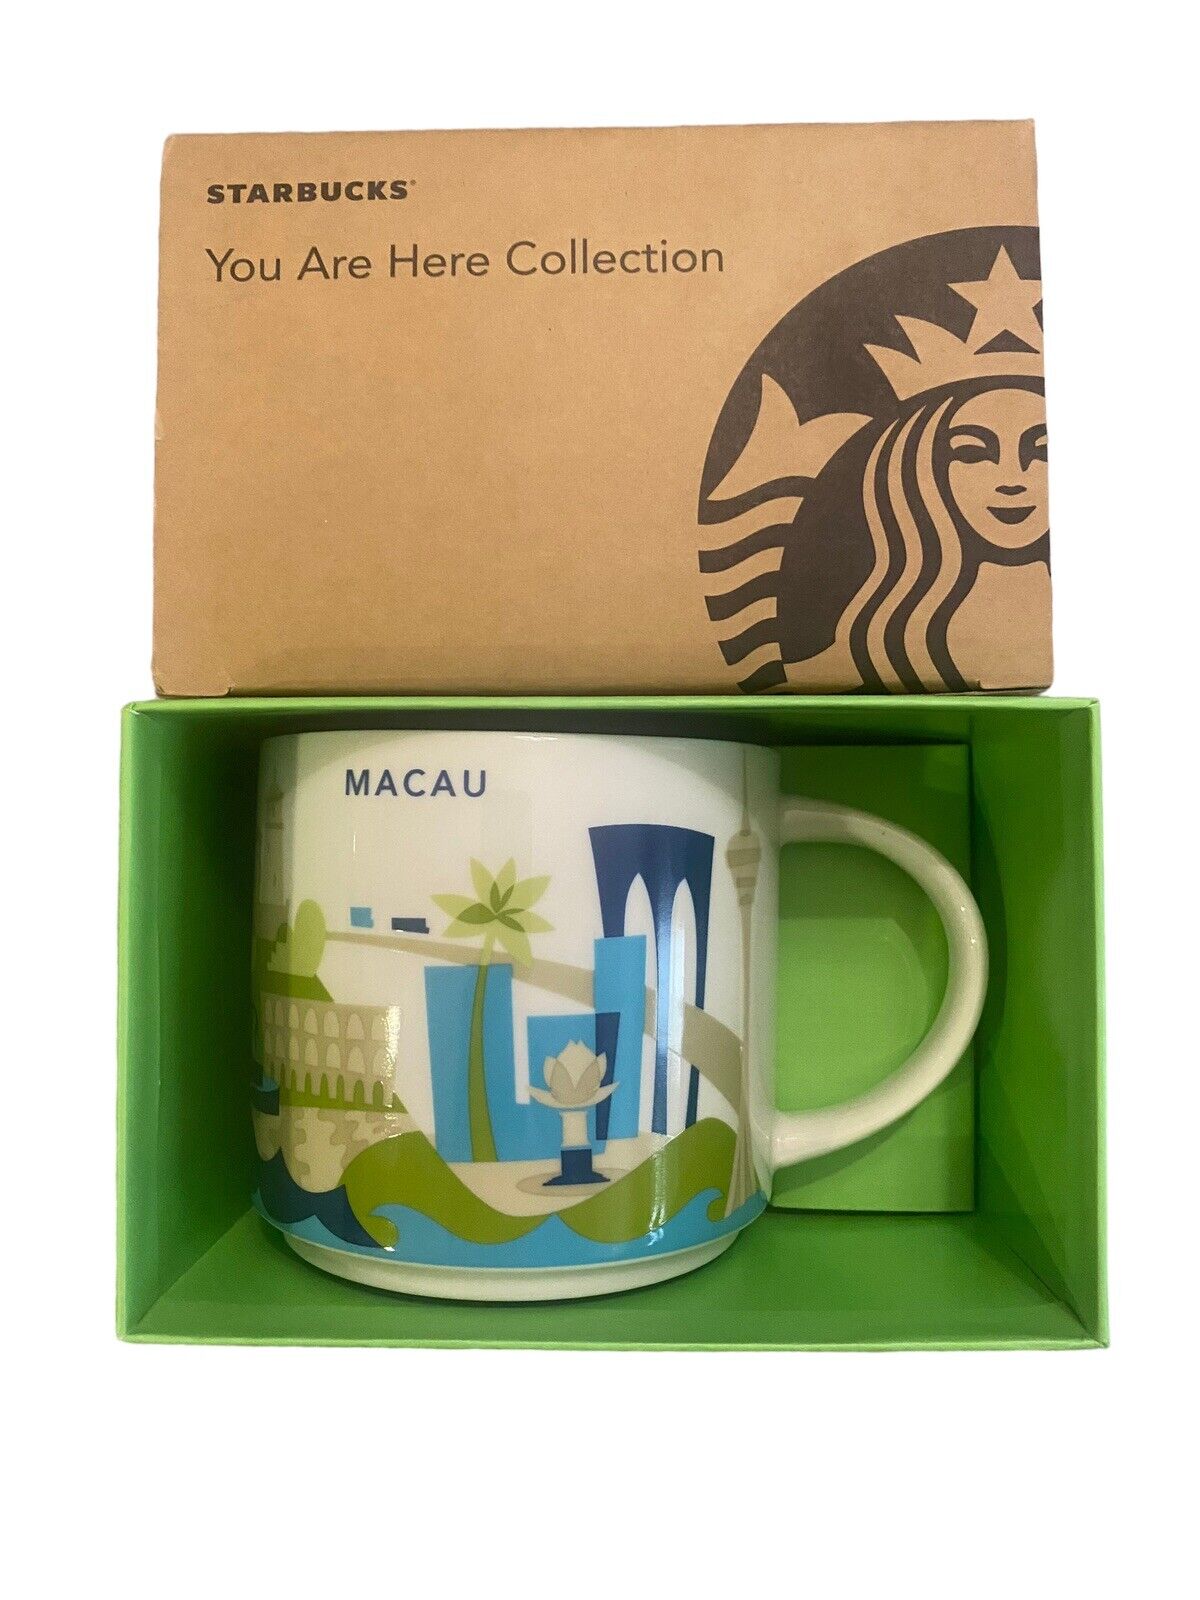 Macau China Starbucks coffee Cup Mug 14oz You Are Here Collection YAH NEW in Box